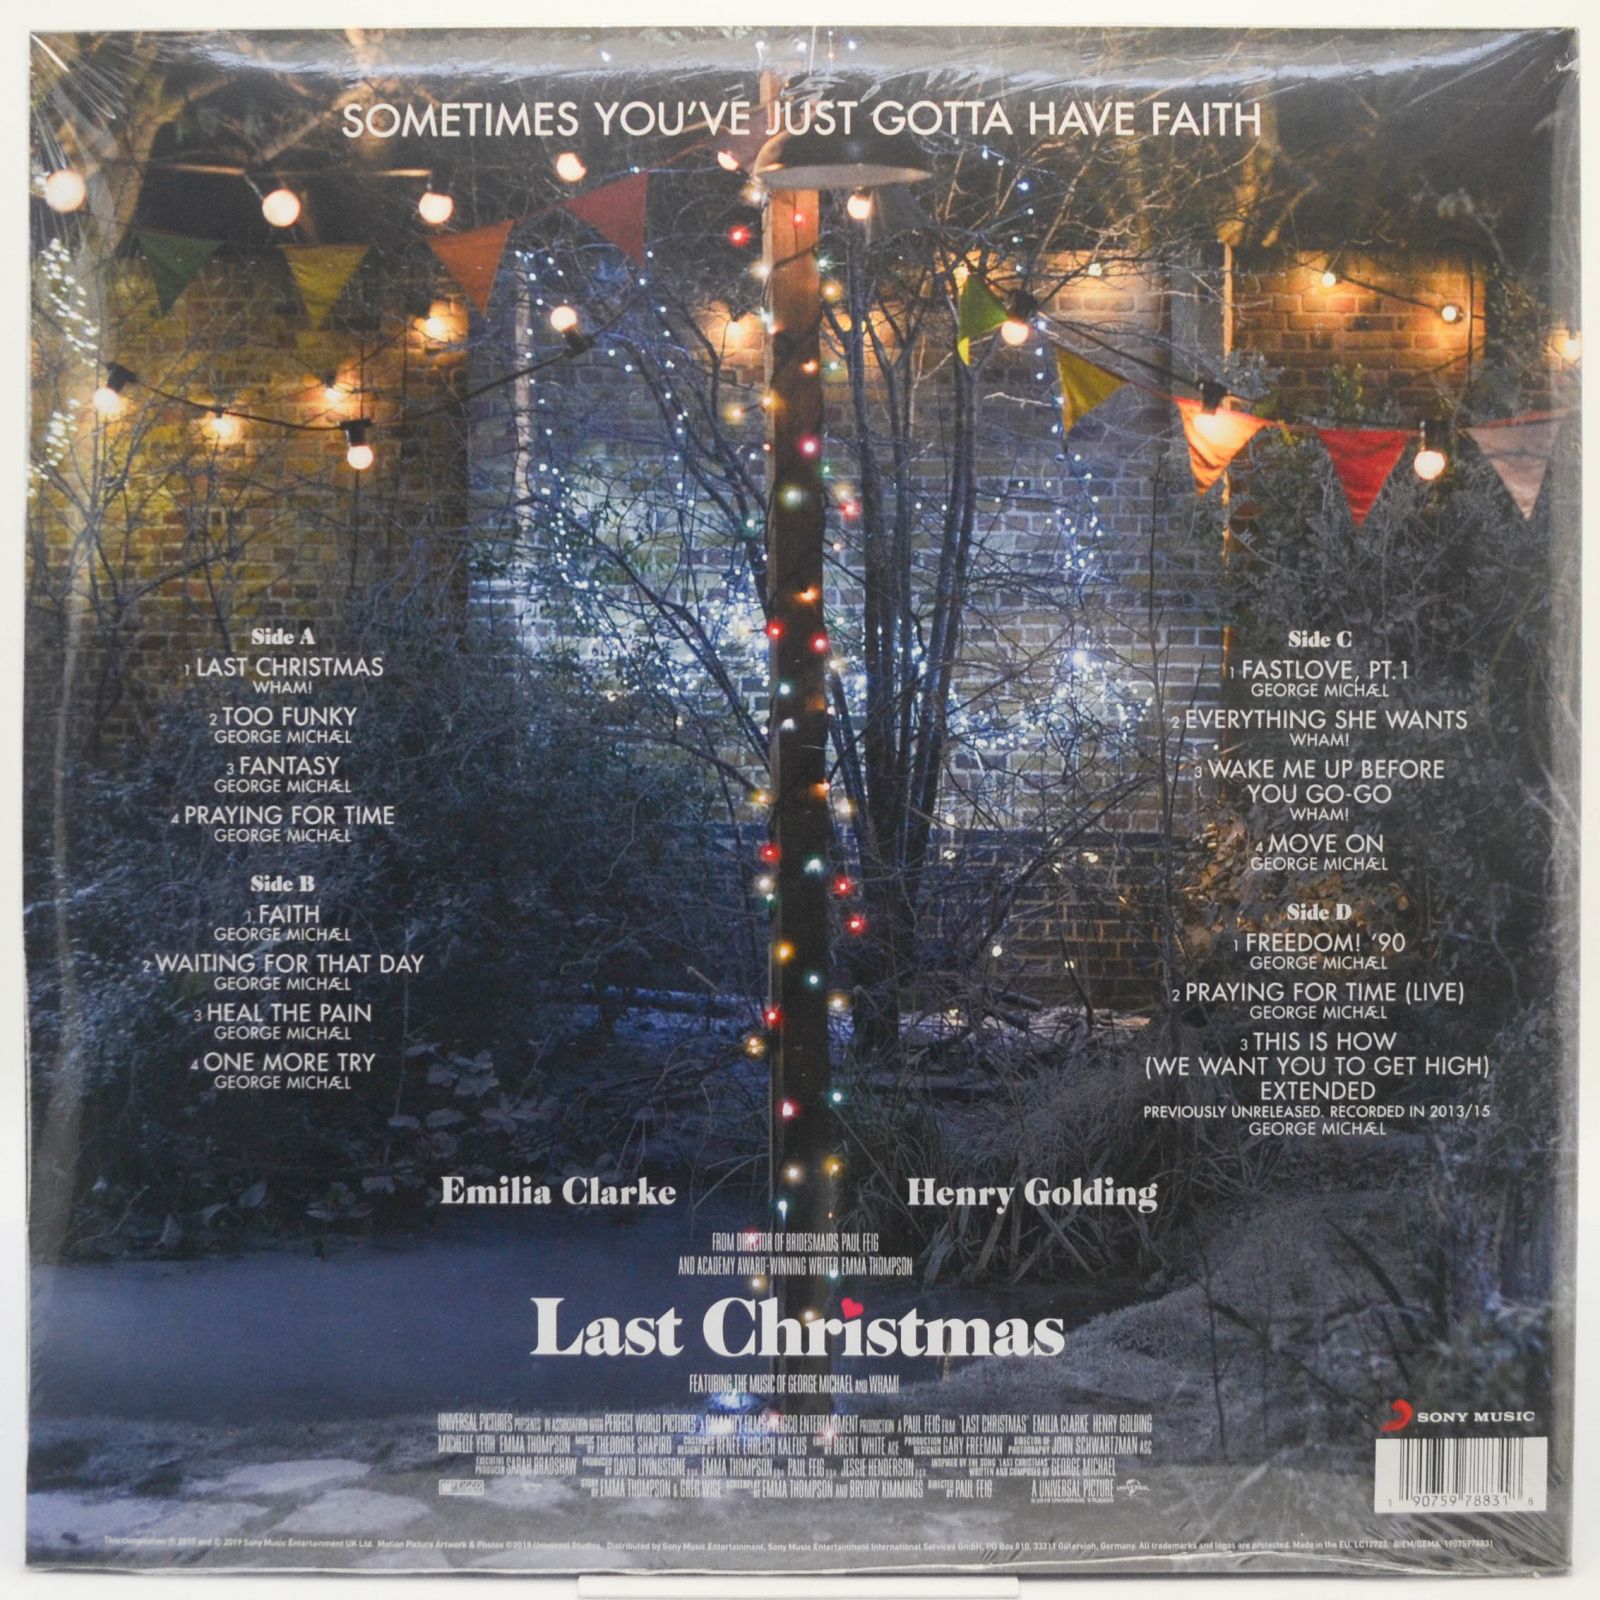 George Michael & Wham! — Last Christmas (The Original Motion Picture Soundtrack) (2LP), 2019